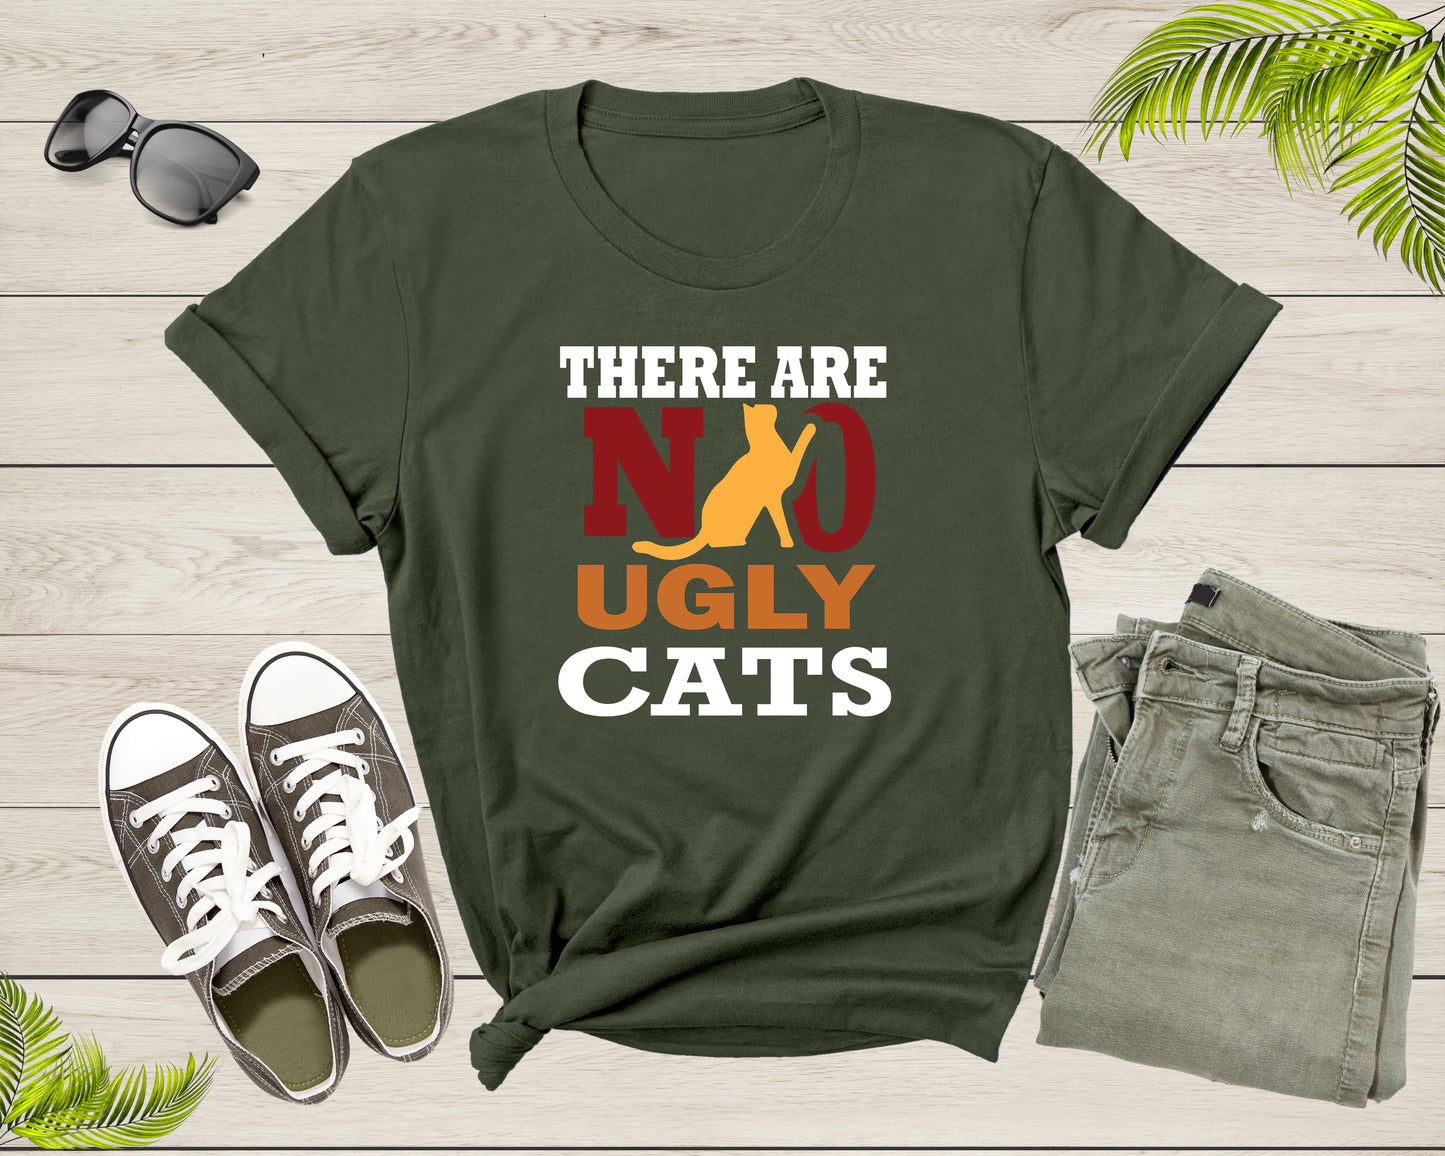 There are No Ugly Cats Kittens Kitties Animal Pet Lovers T-Shirt Cat Kitten Lover Owner Gift T Shirt for Men Women Kids Boys Girls Tshirt